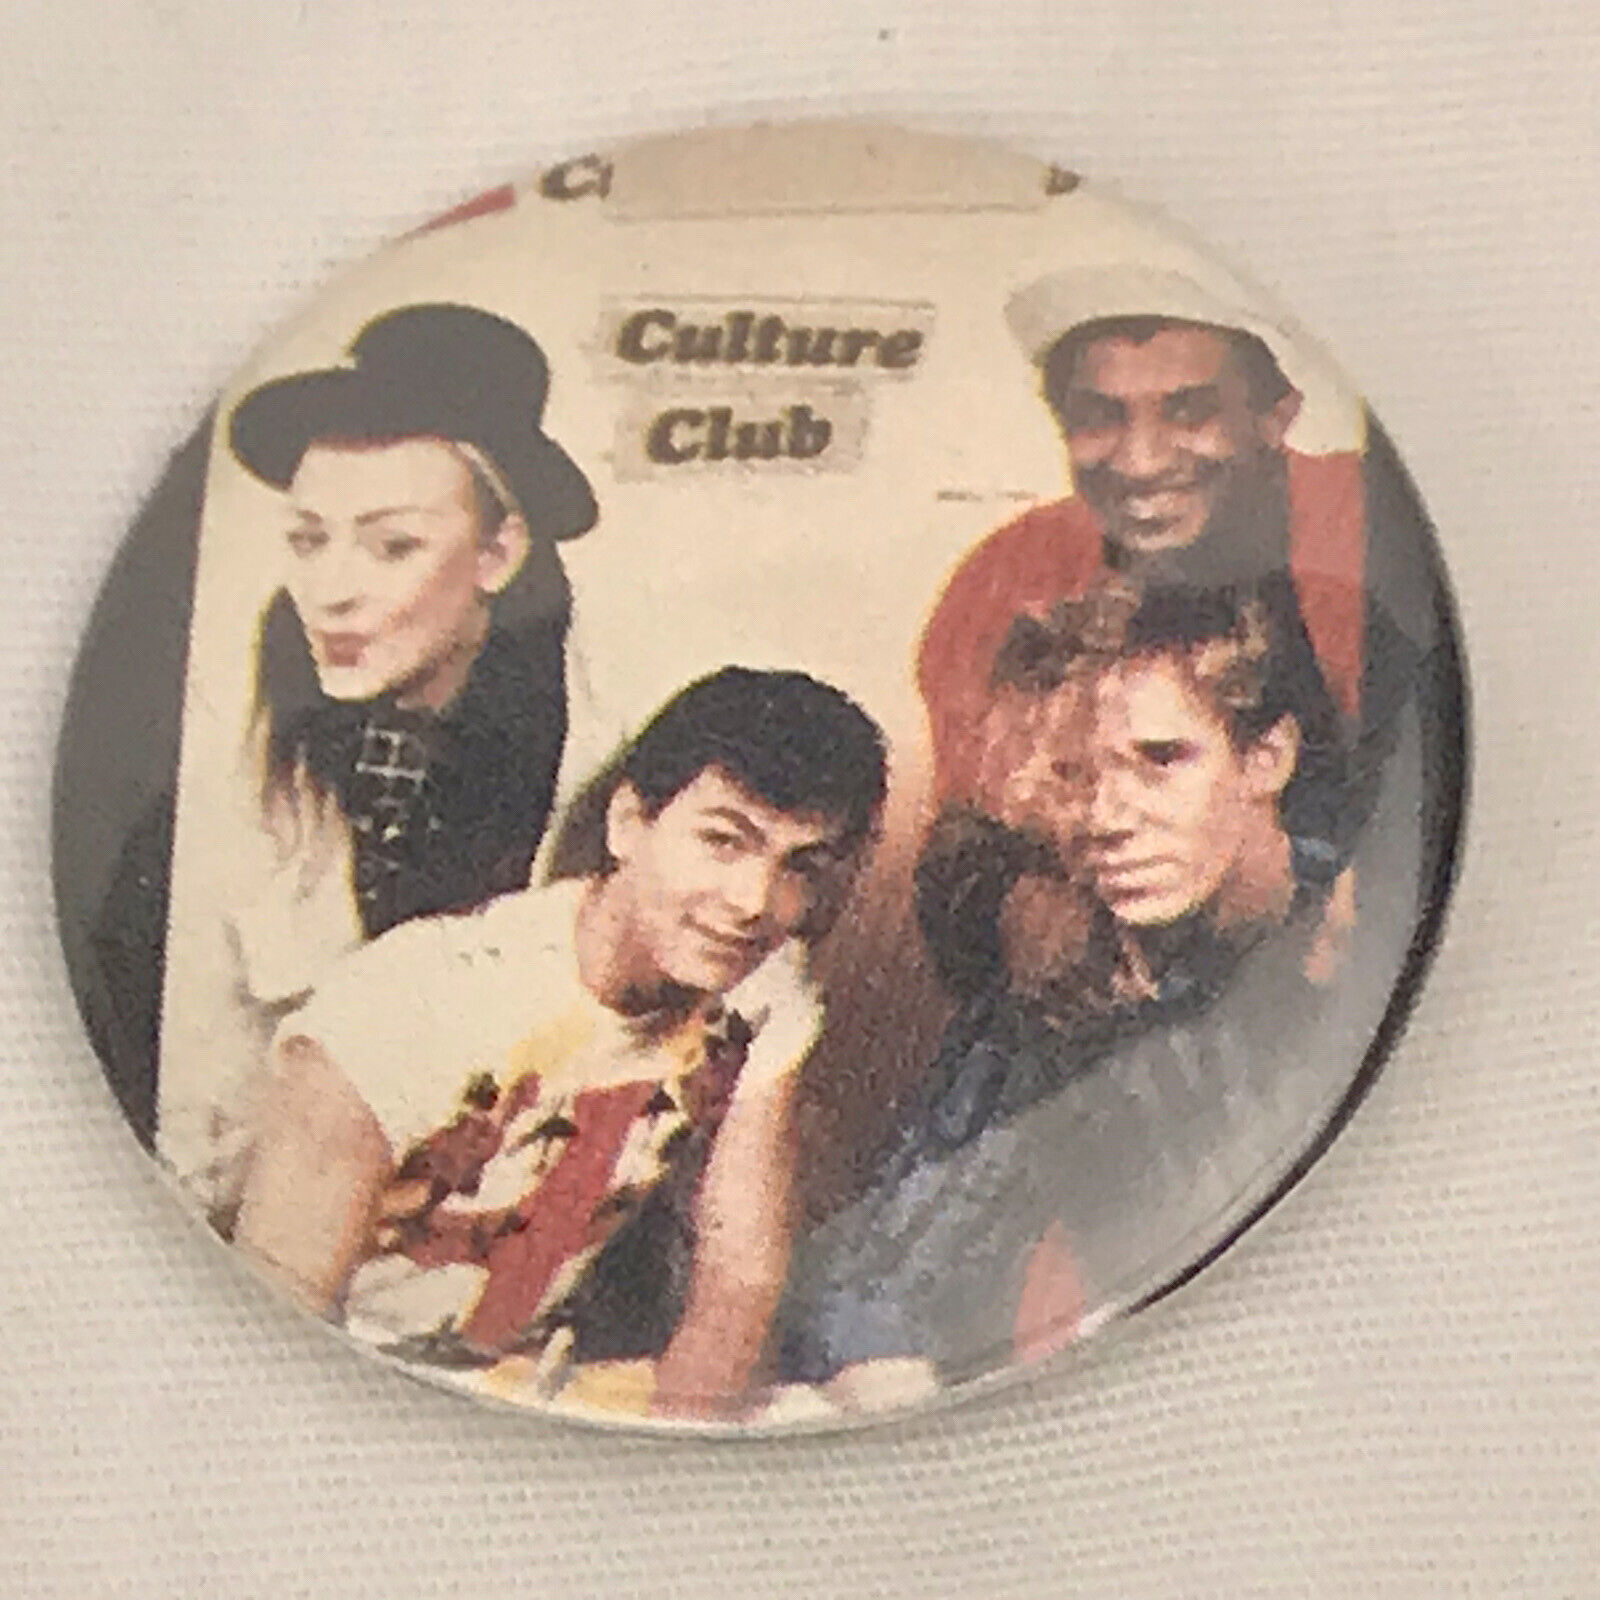 Culture Club Vintage Pin Button Boy George 80s Music